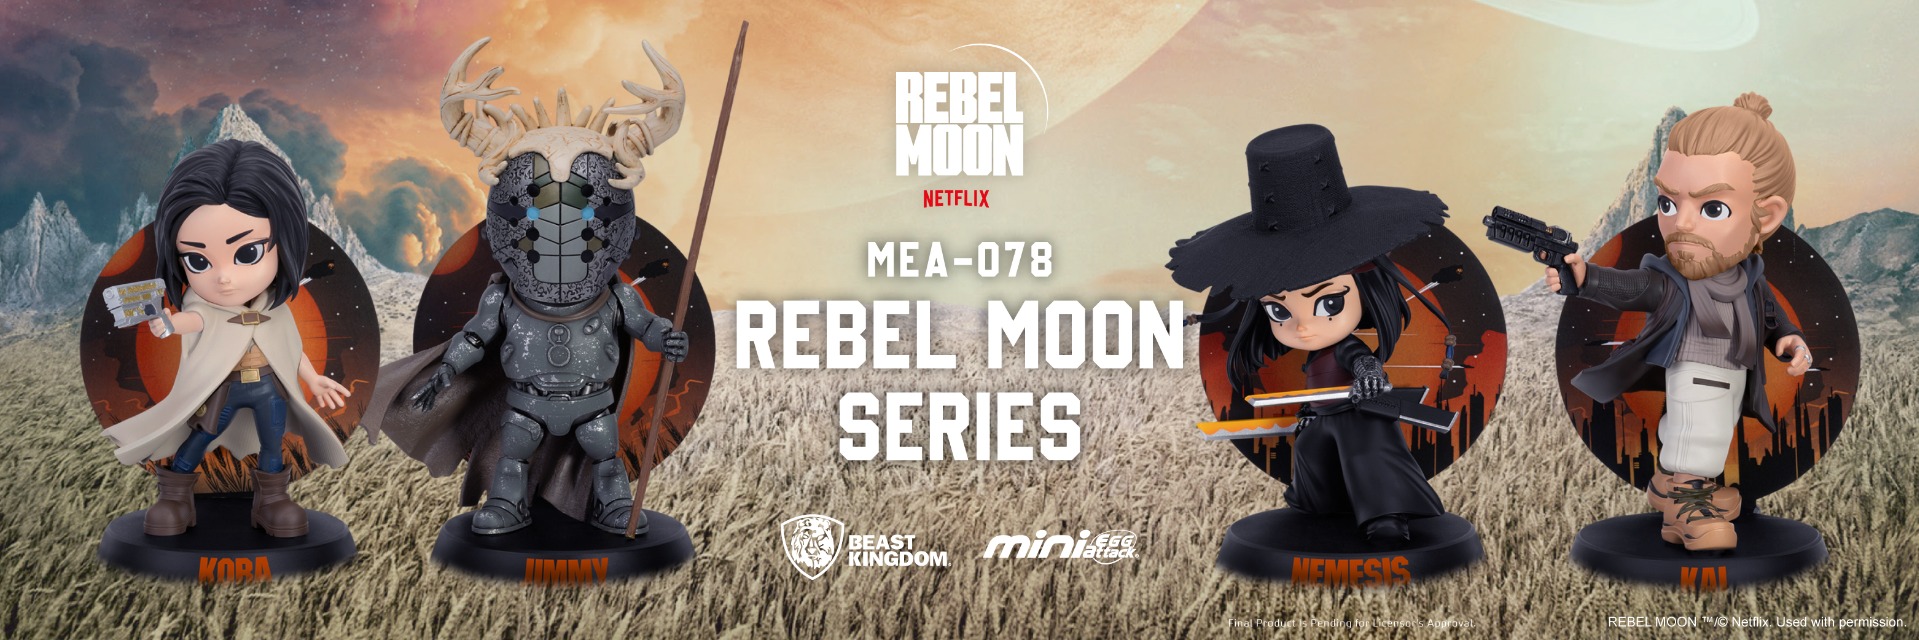 MEA-078 Rebel Moon Series KAI, MEA-078 Rebel Moon Series JIMMY, MEA-078 Rebel Moon Series KORA, MEA-078 Rebel Moon Series NEMESIS